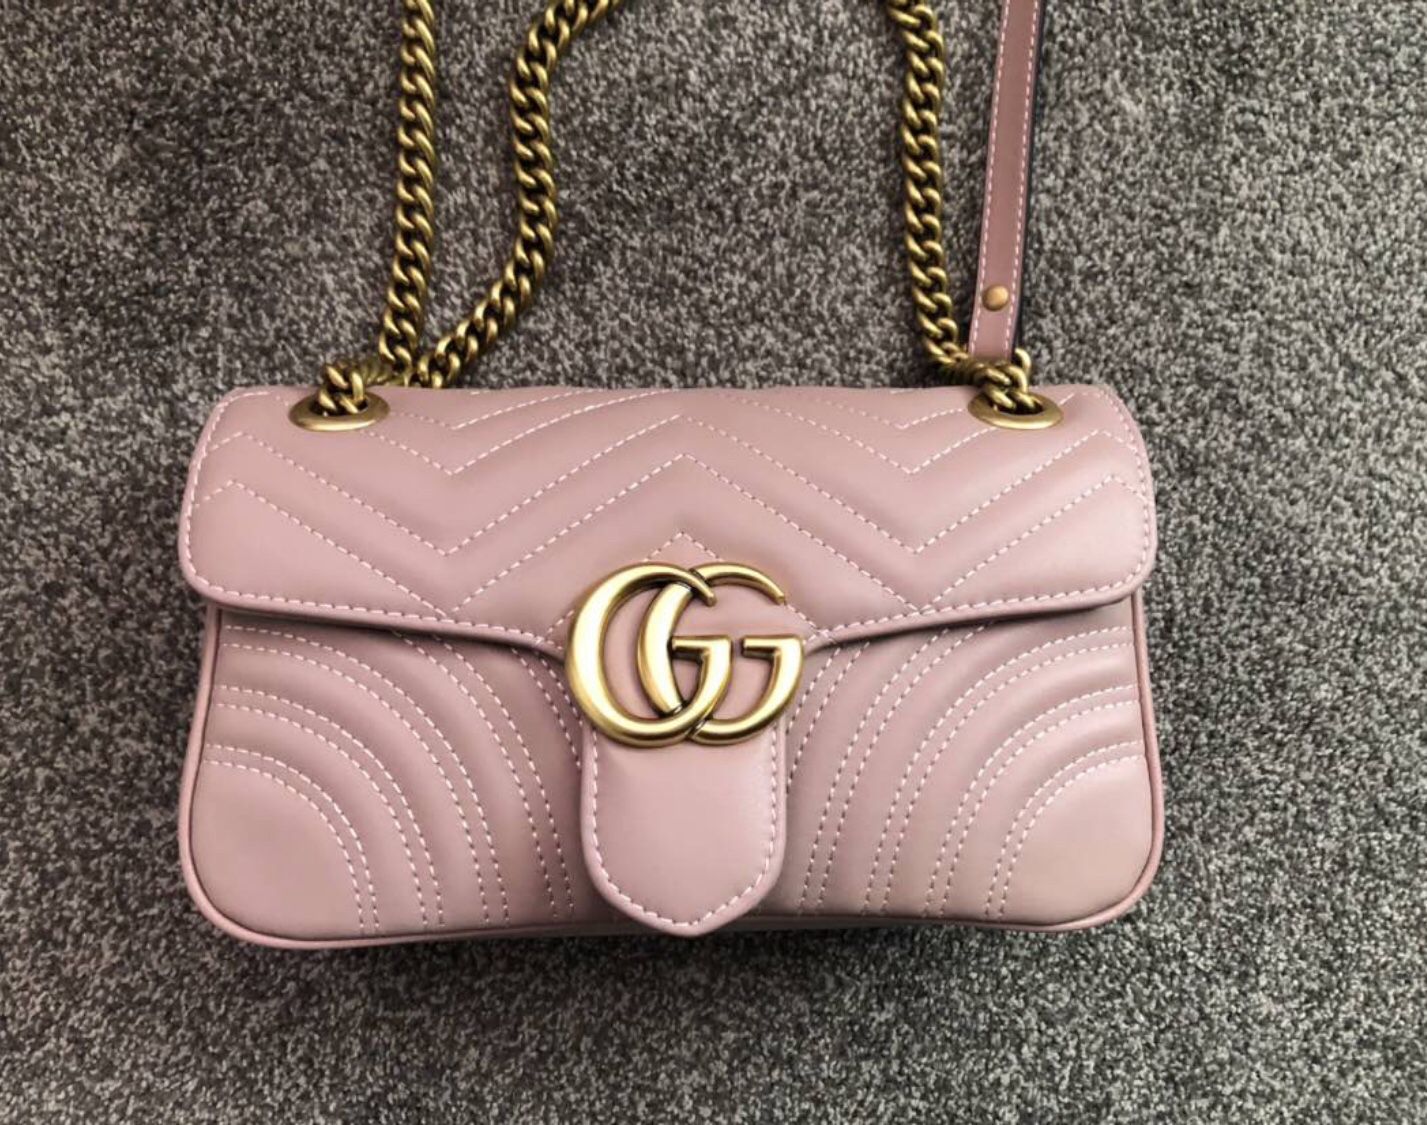 GG crossbody bag pink leather